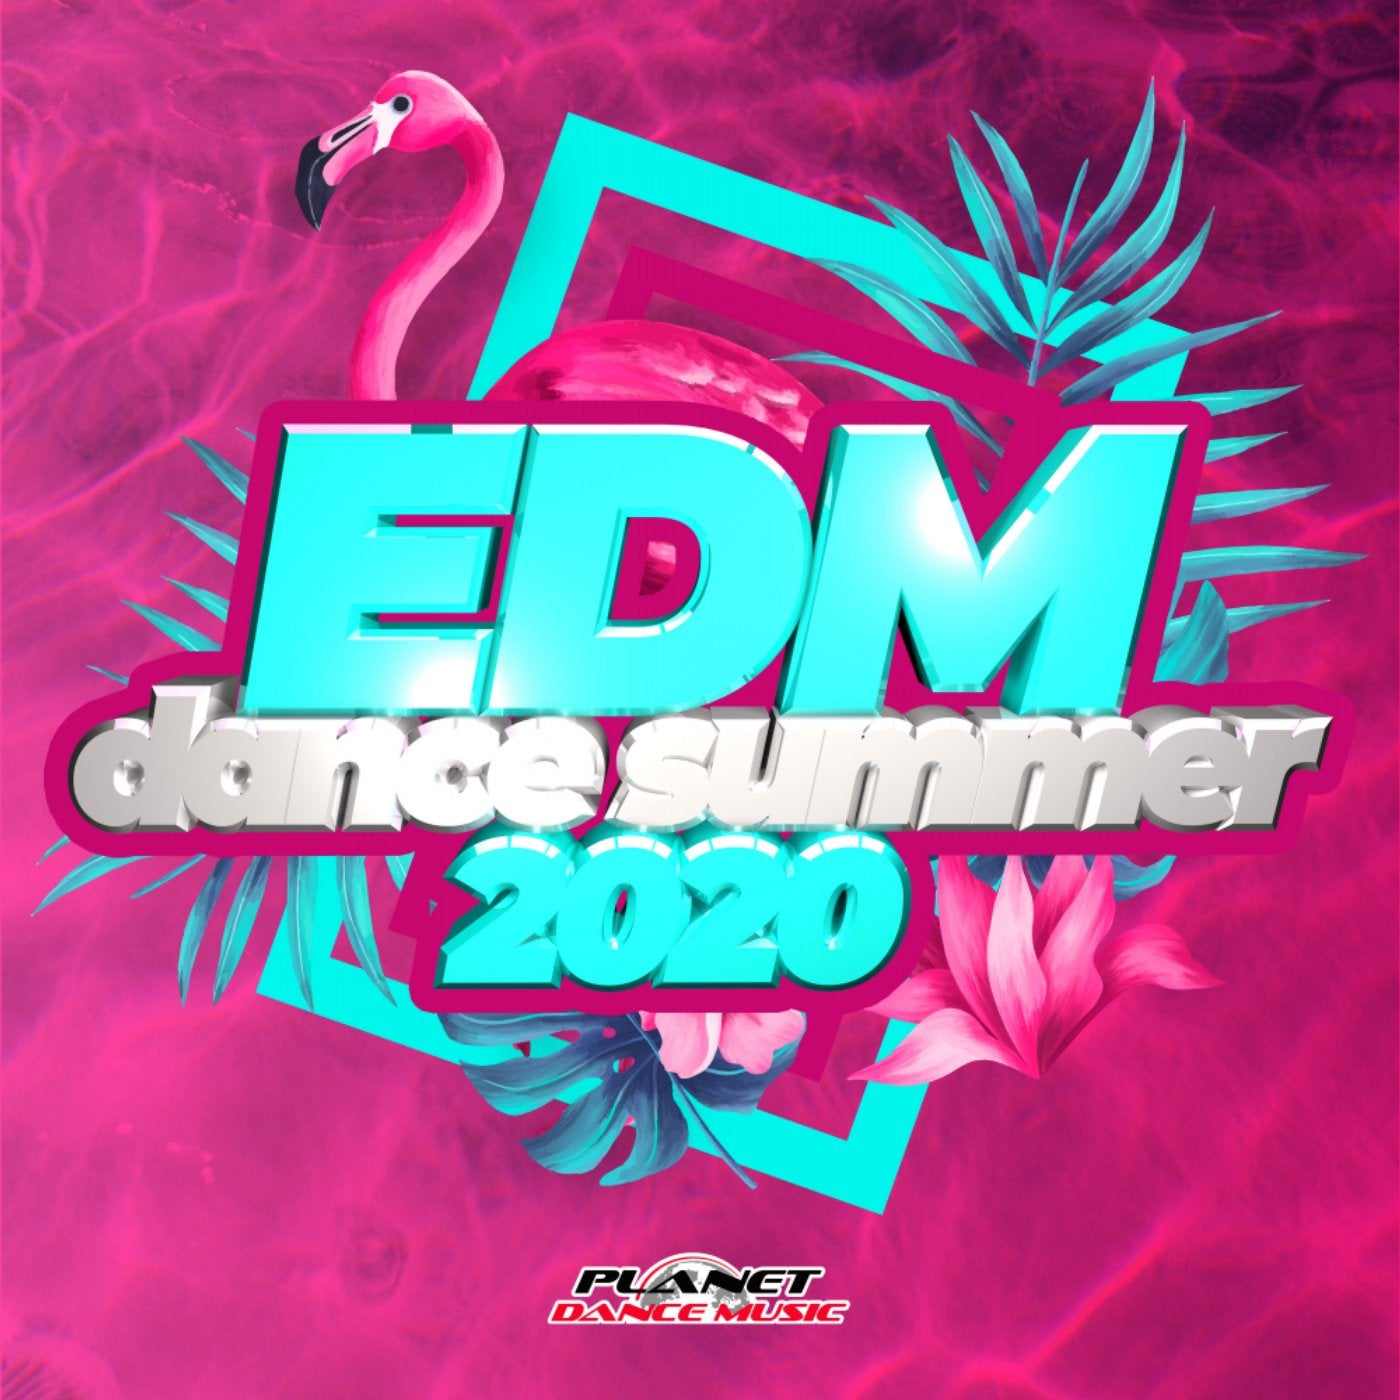 EDM Dance Summer 2020